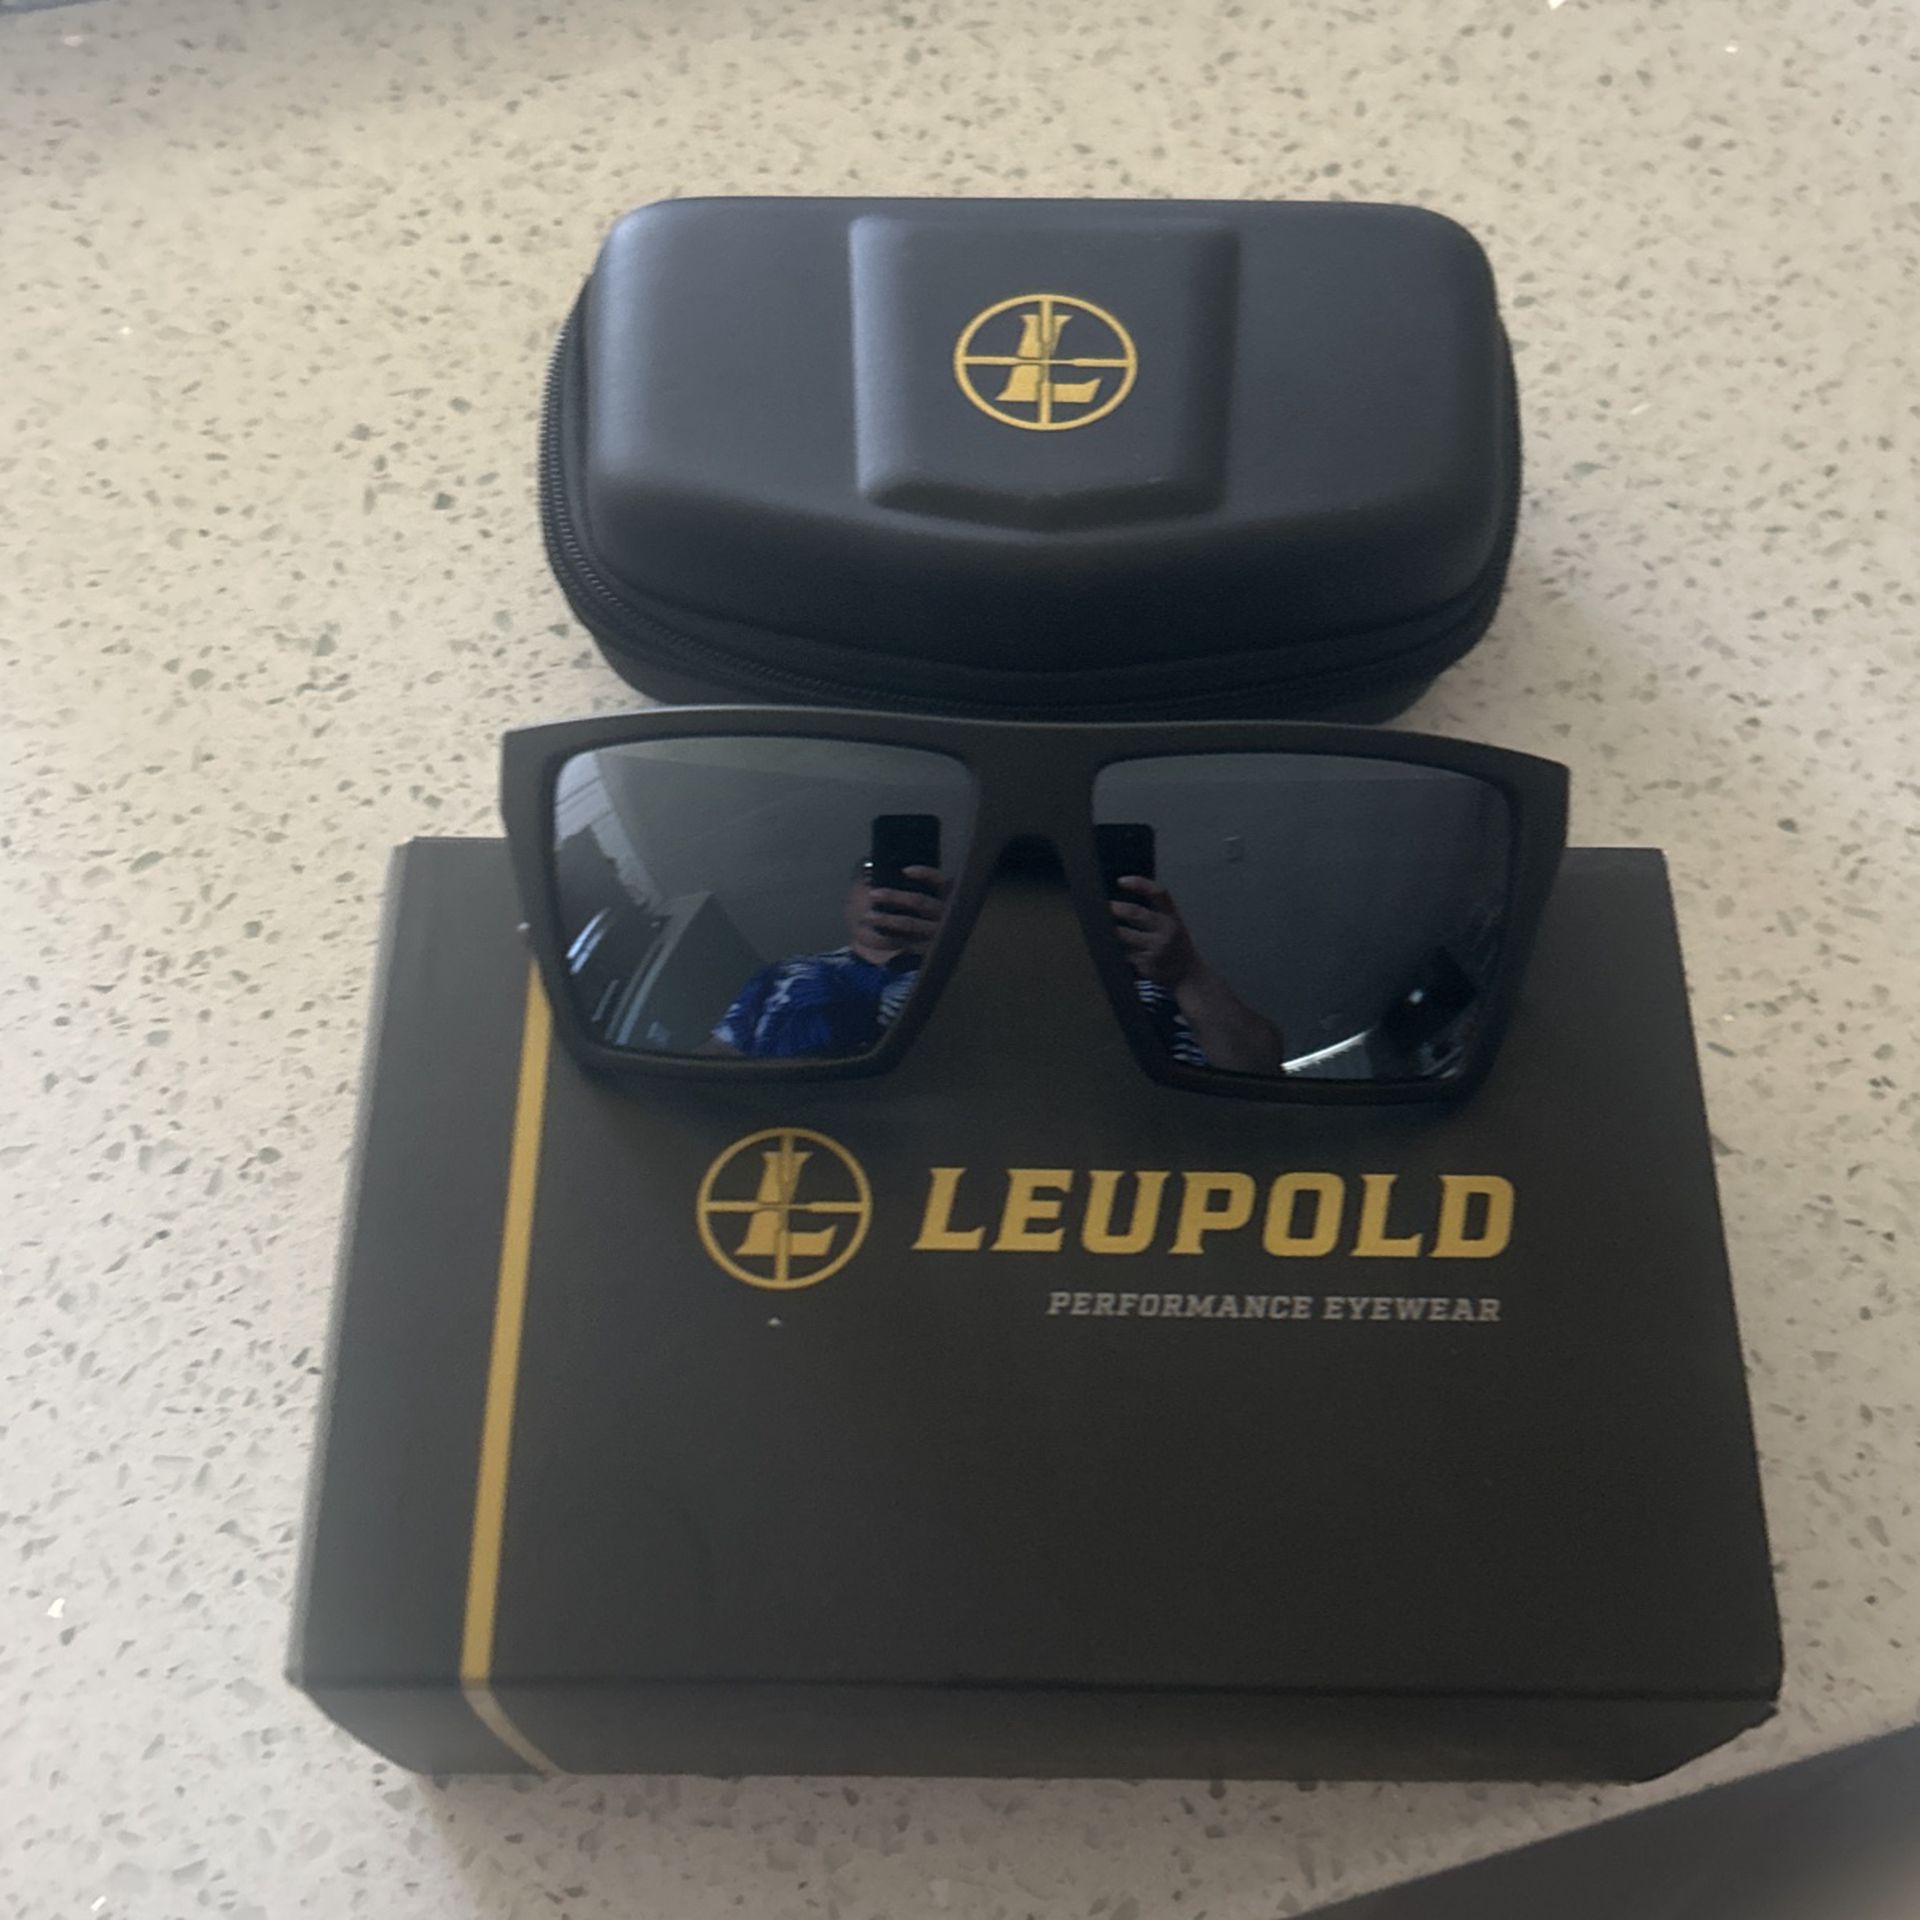 Leupold Performance Eyewear Sunglasses